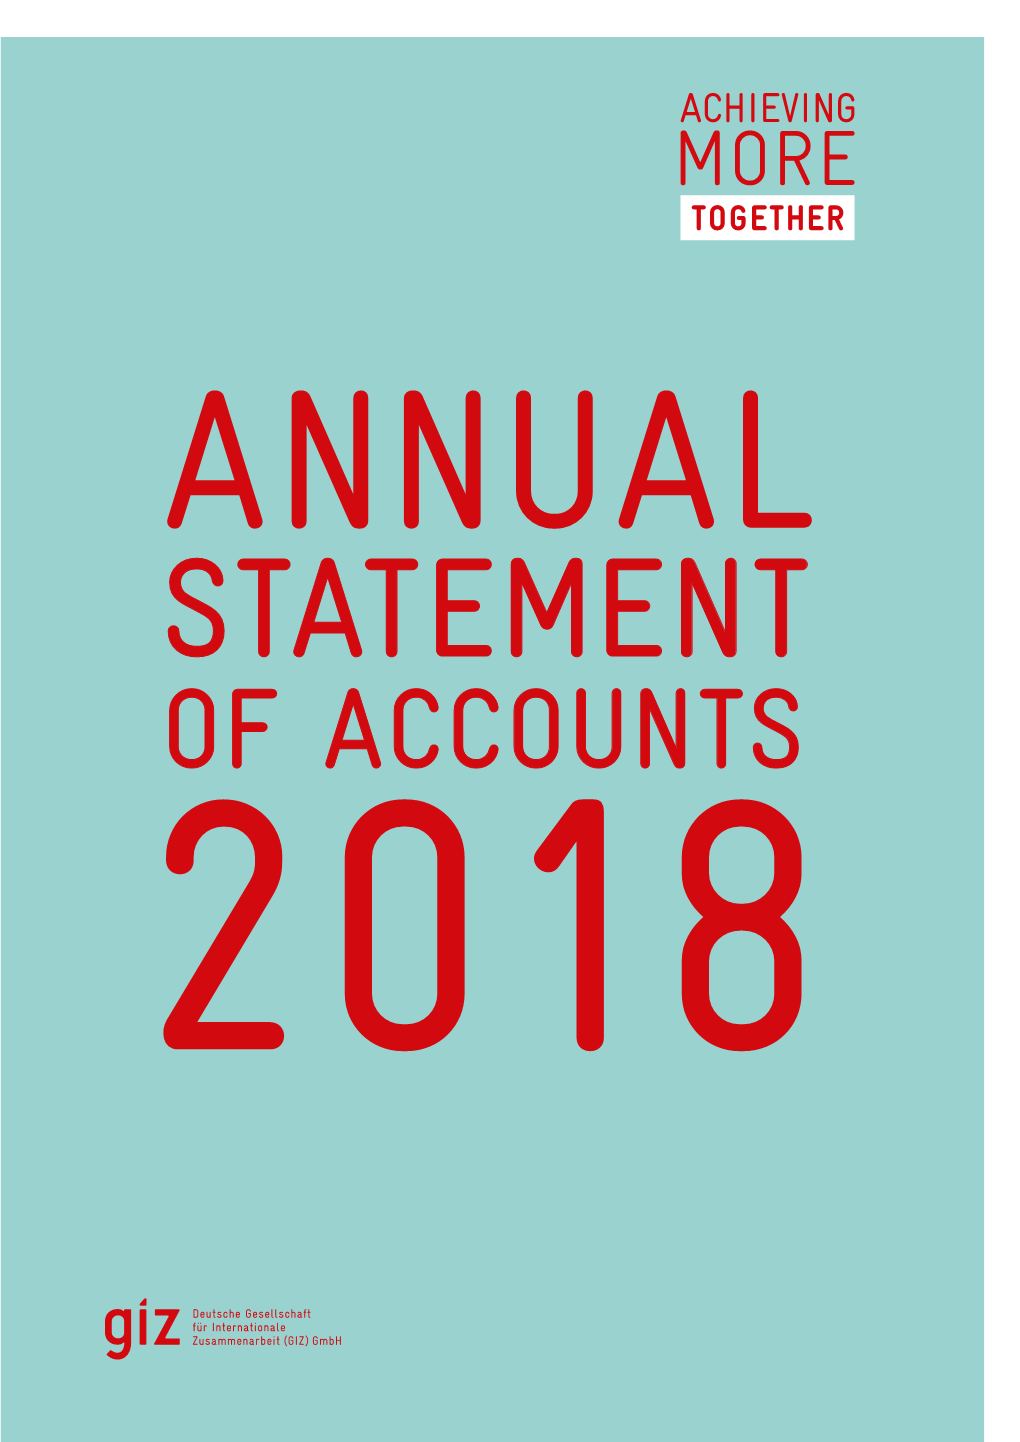 Of Accounts 2018 Contents